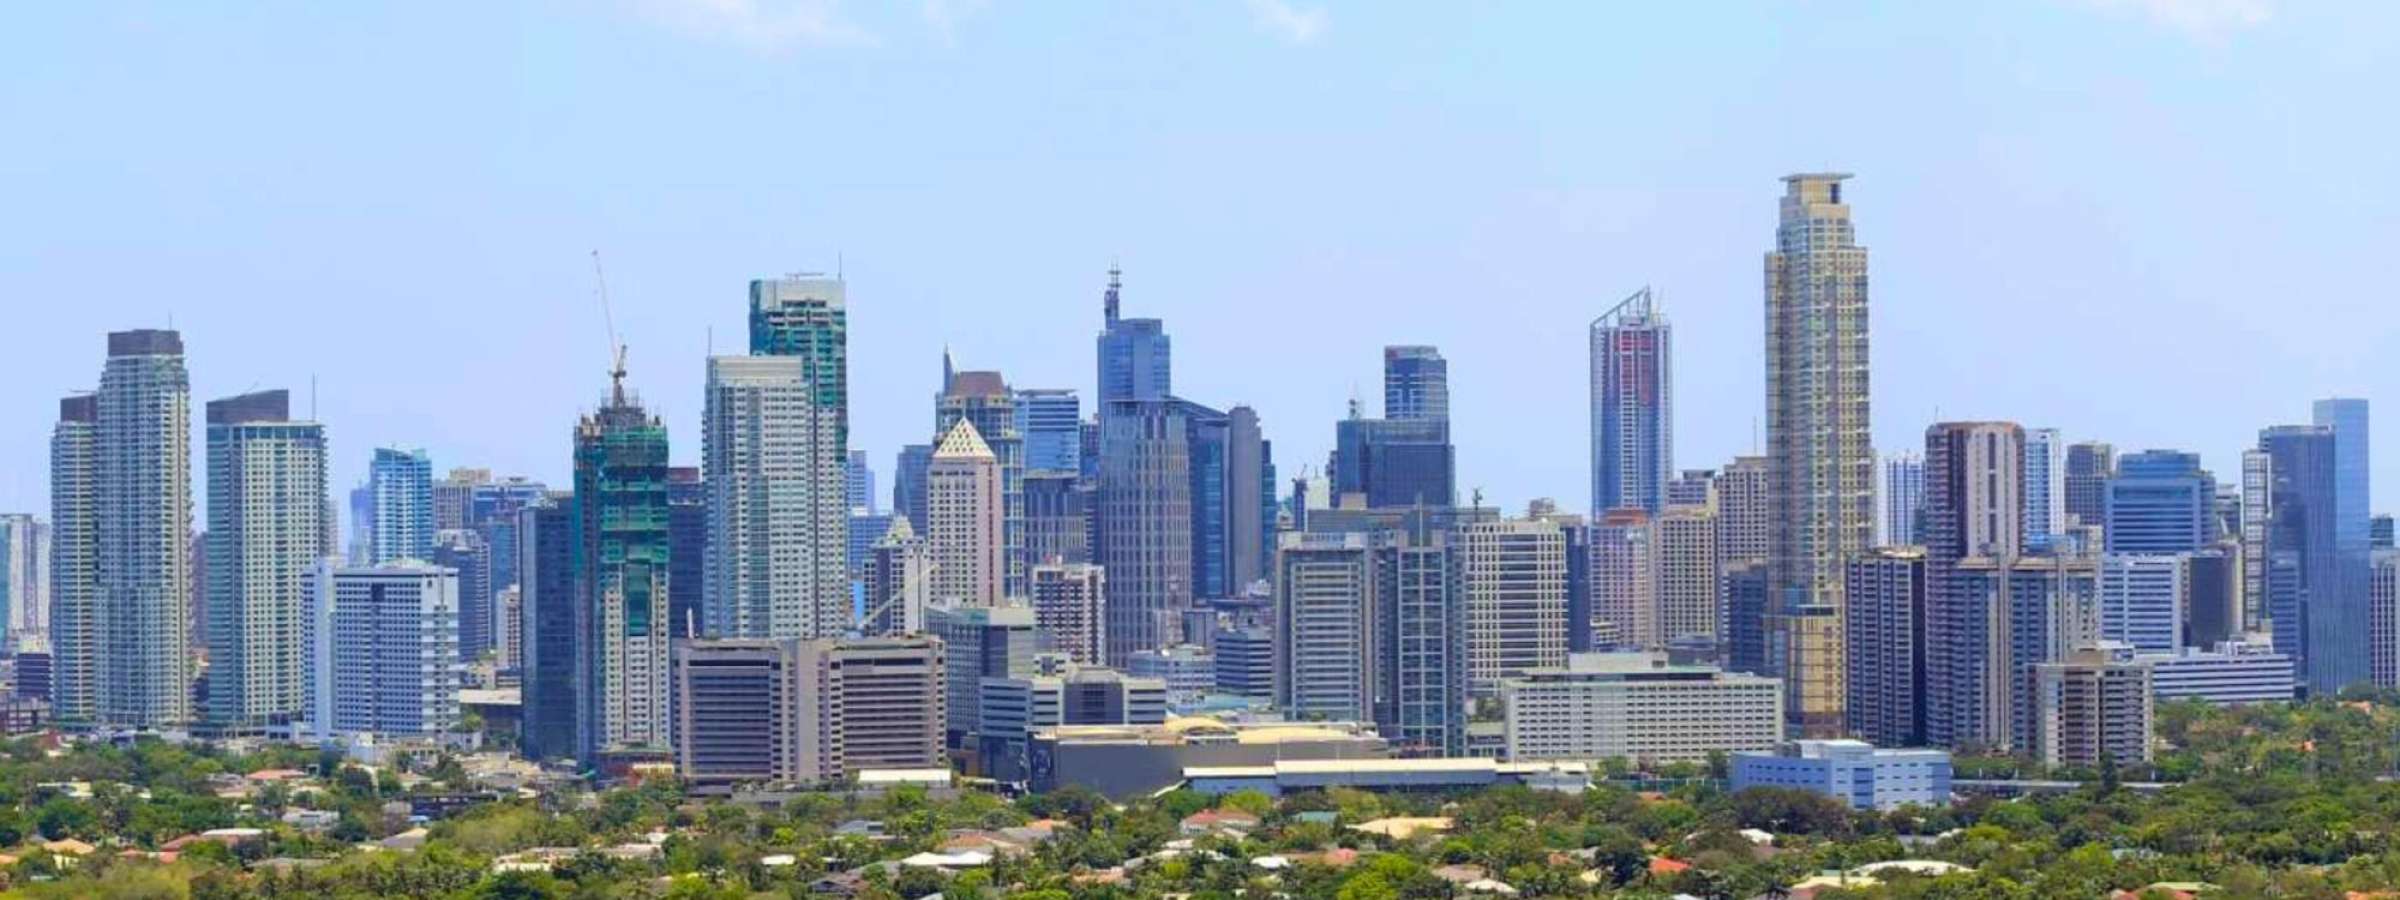 Manila skyline